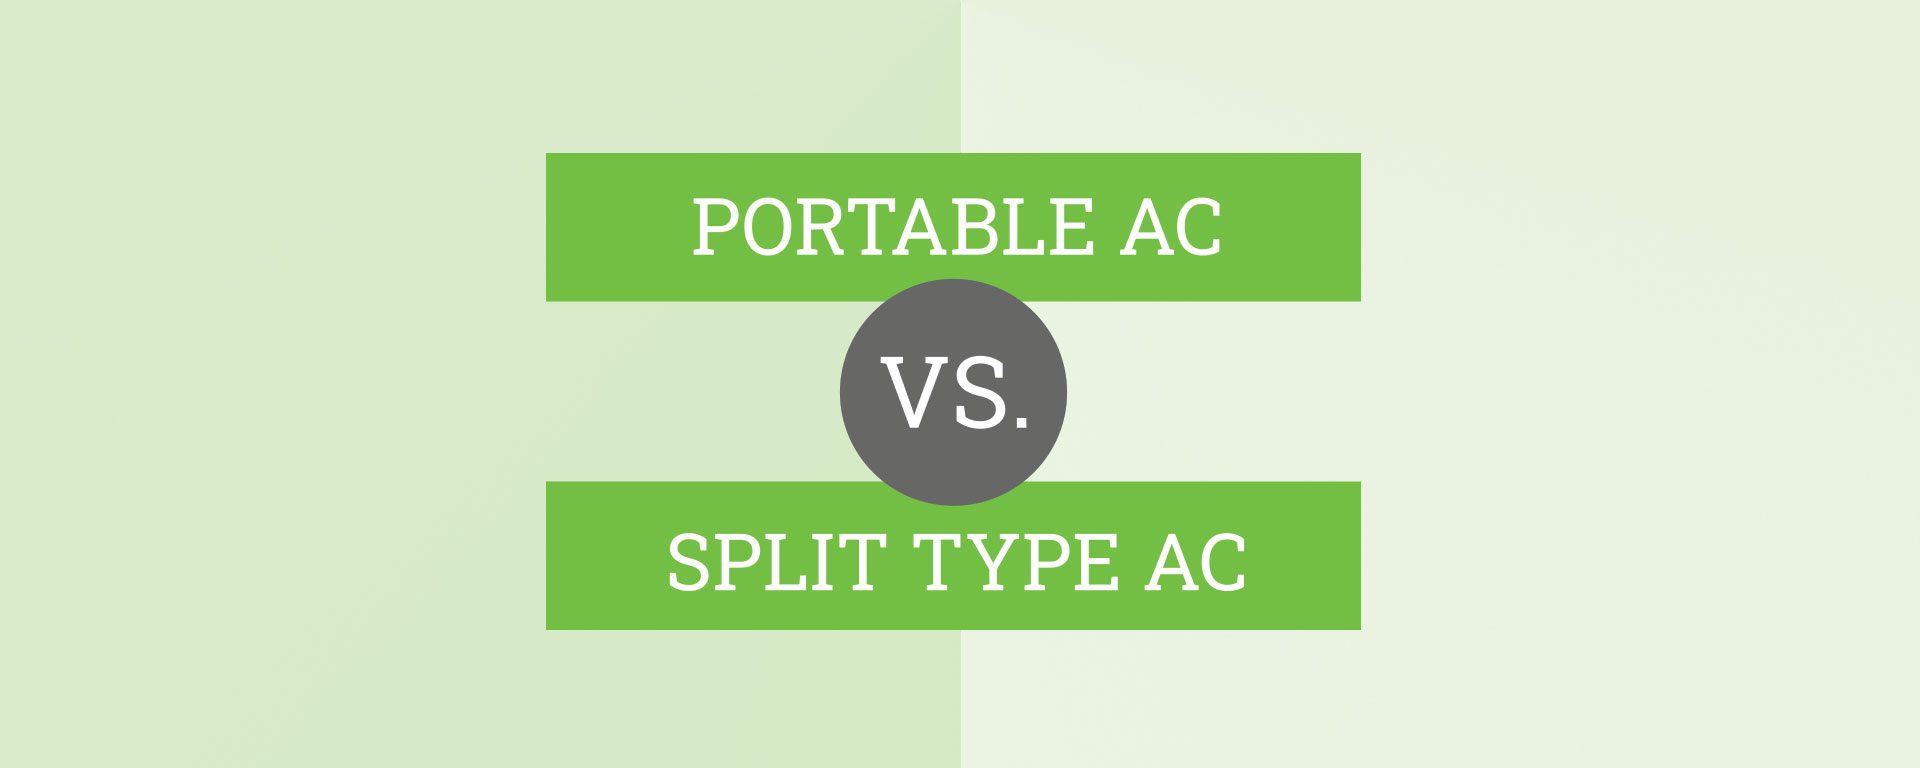 portable aircon vs. split type aircon